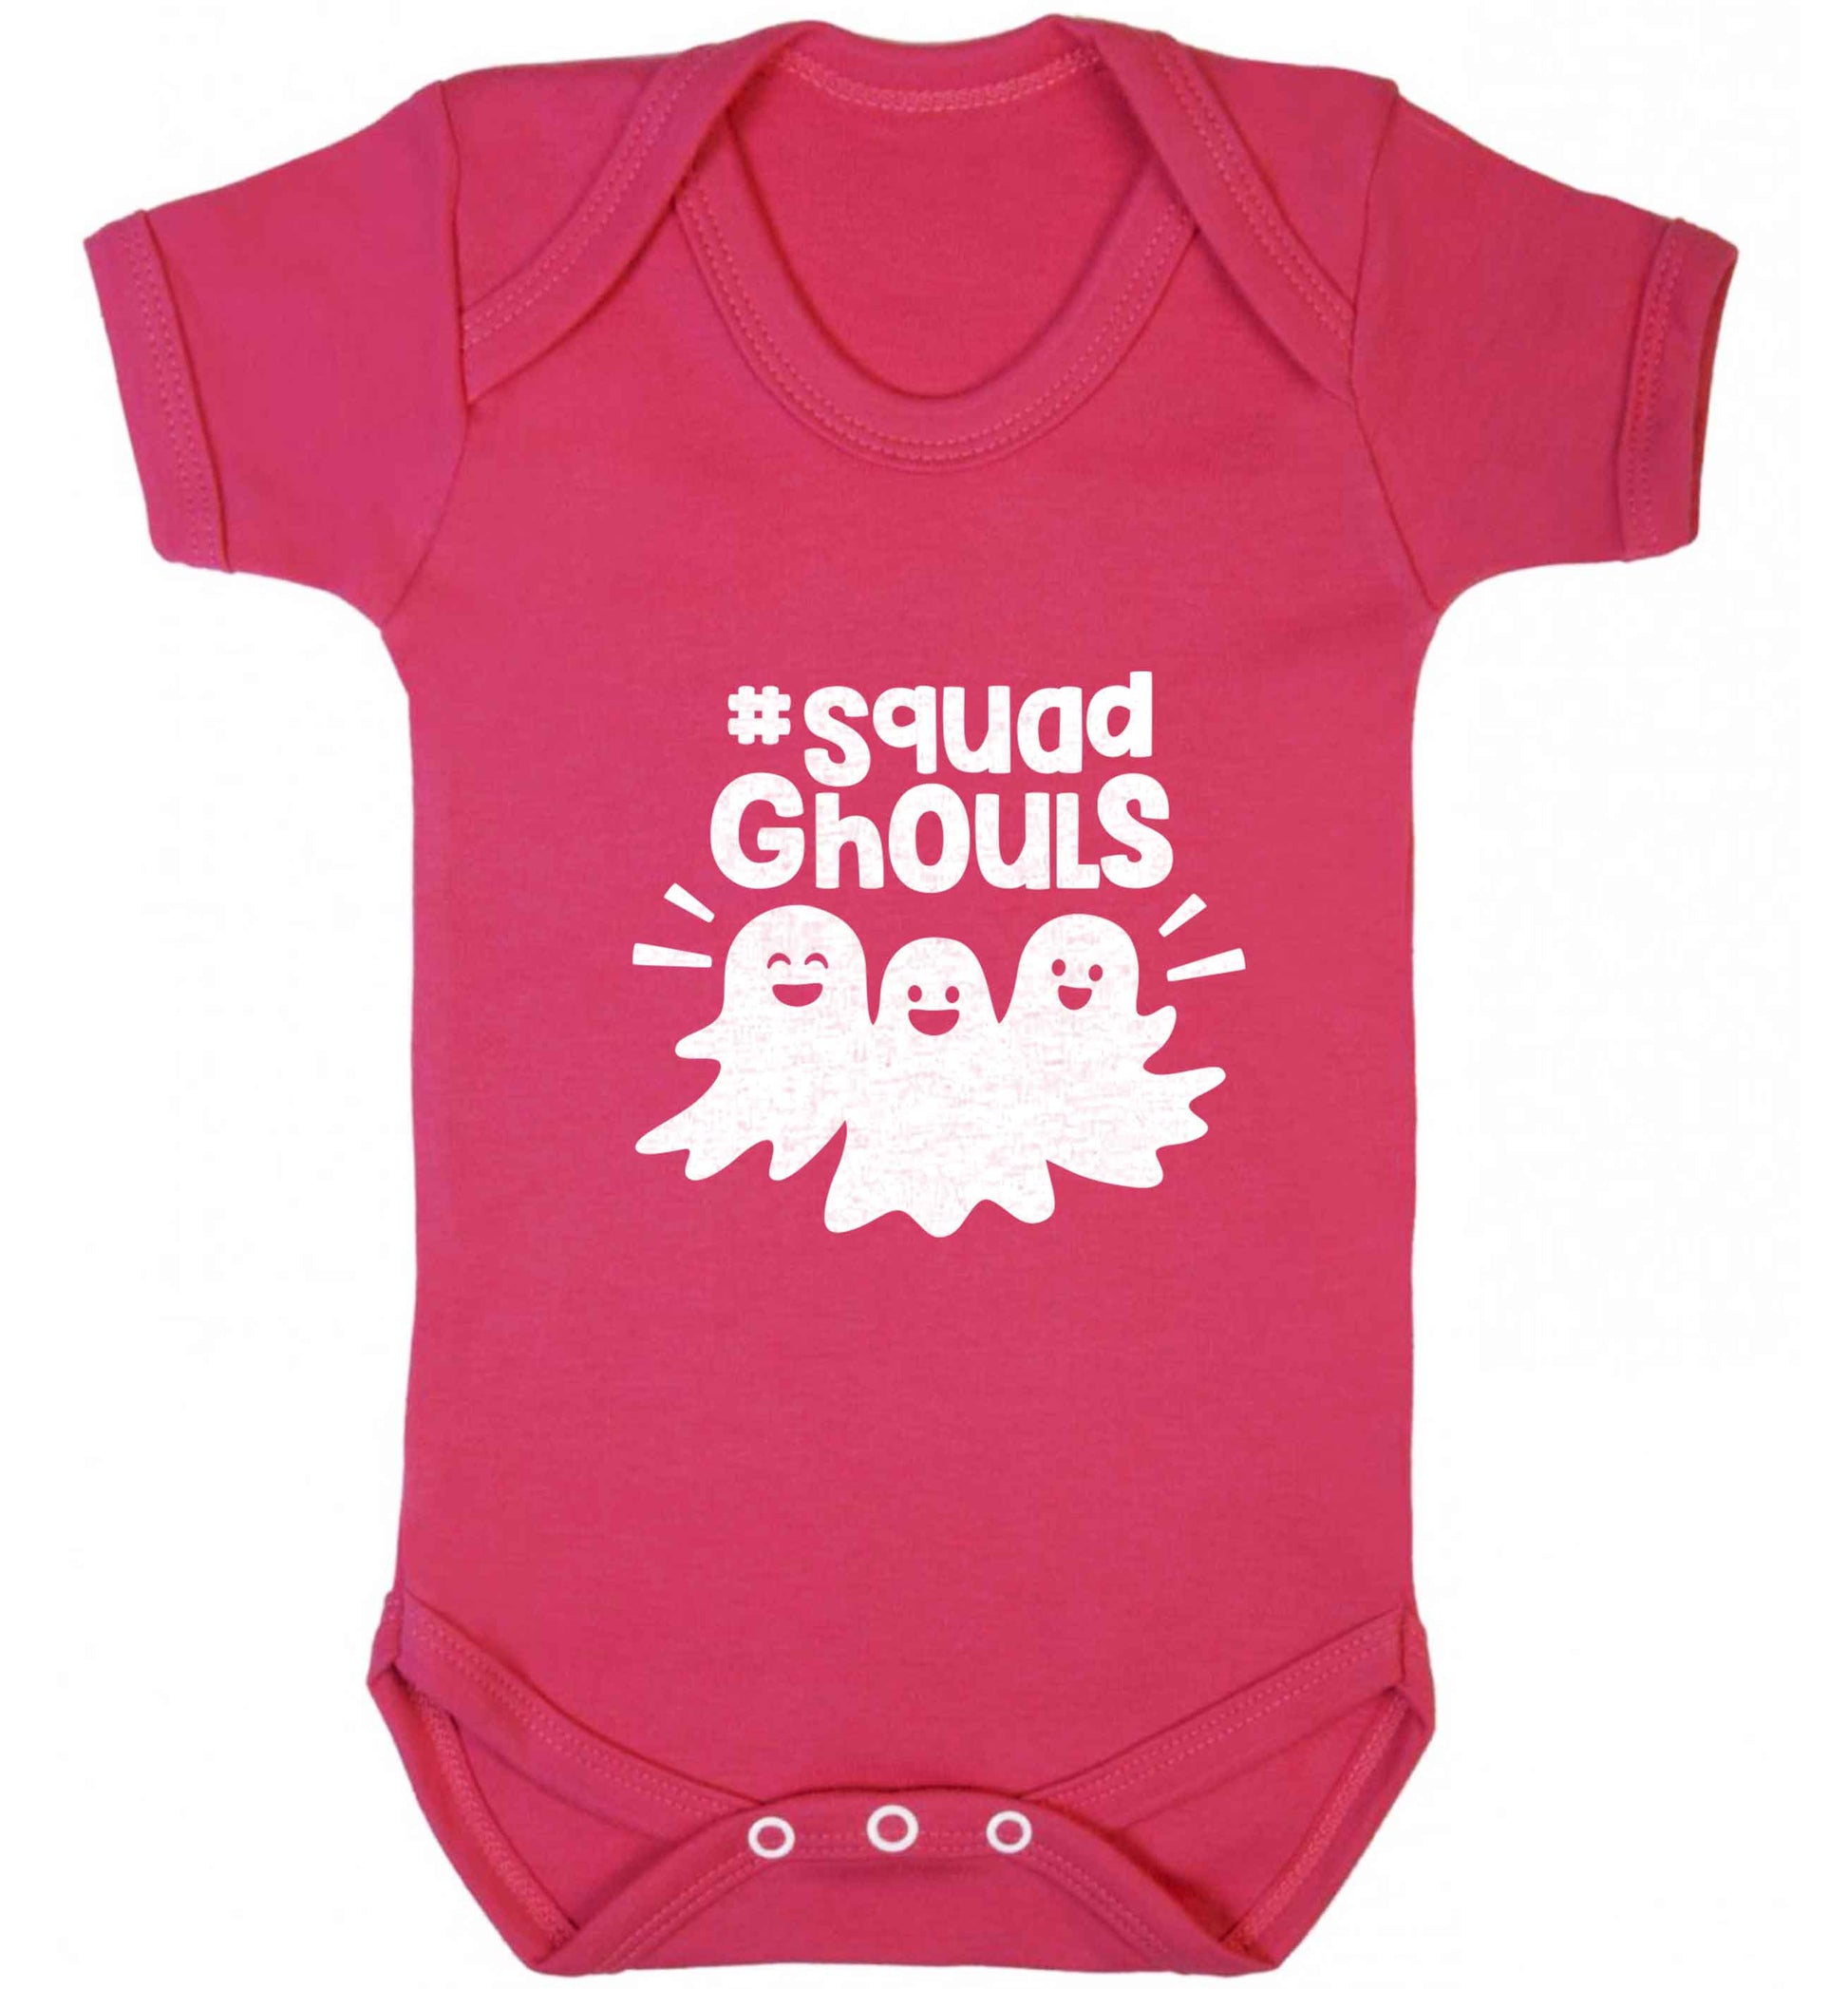 Squad ghouls Kit baby vest dark pink 18-24 months